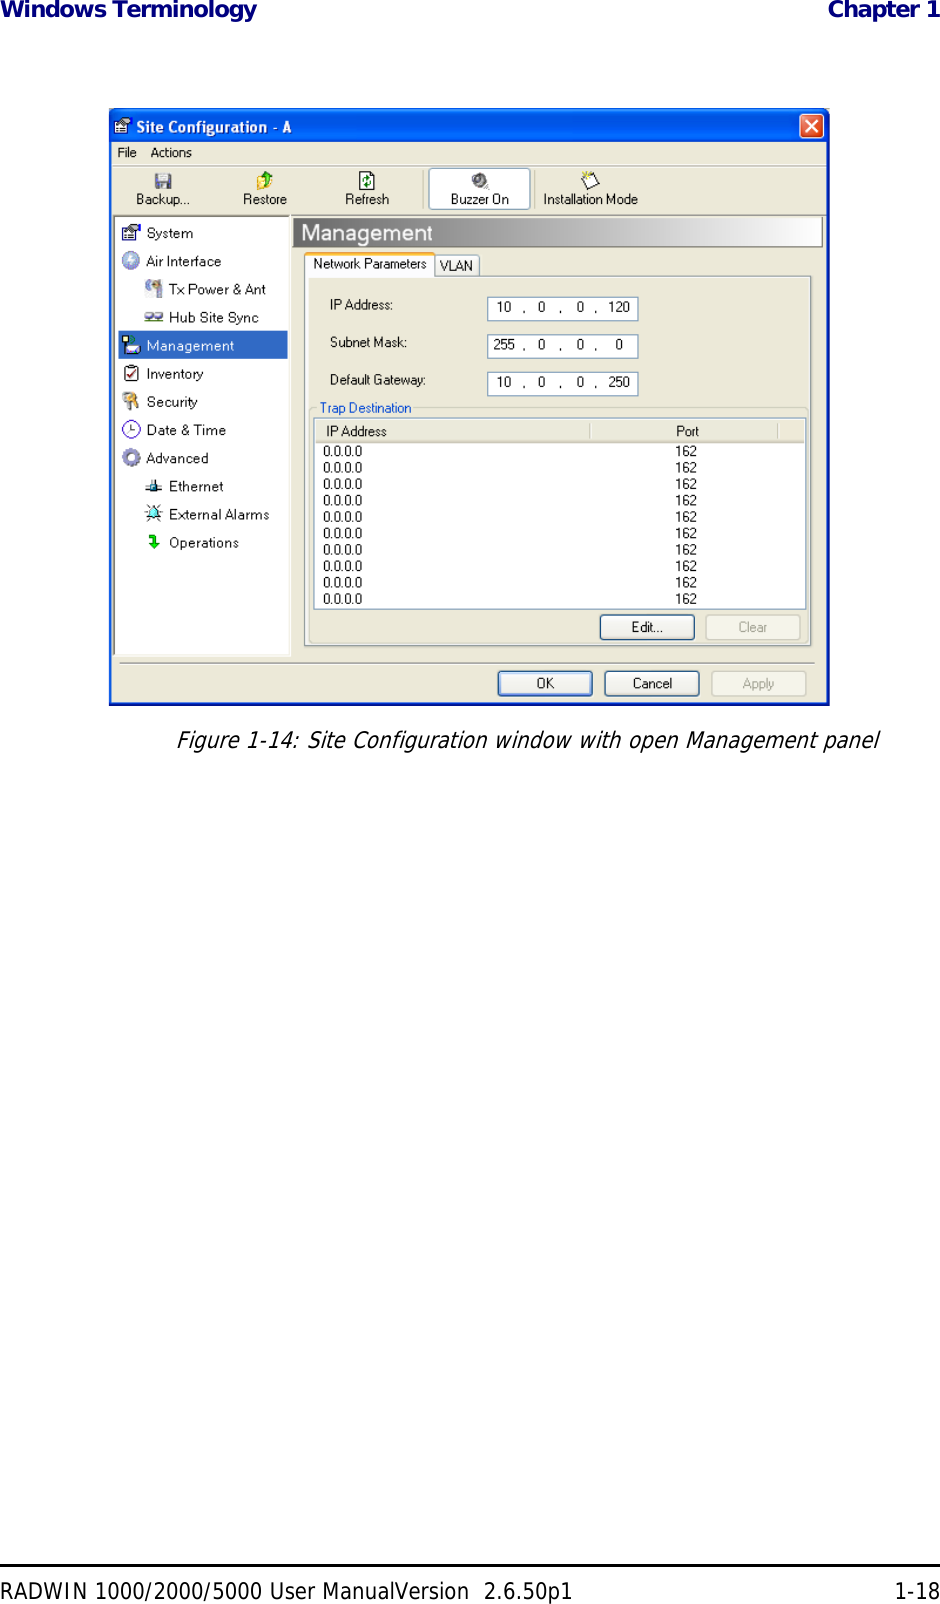 Windows Terminology  Chapter 1RADWIN 1000/2000/5000 User ManualVersion  2.6.50p1 1-18Figure 1-14: Site Configuration window with open Management panel